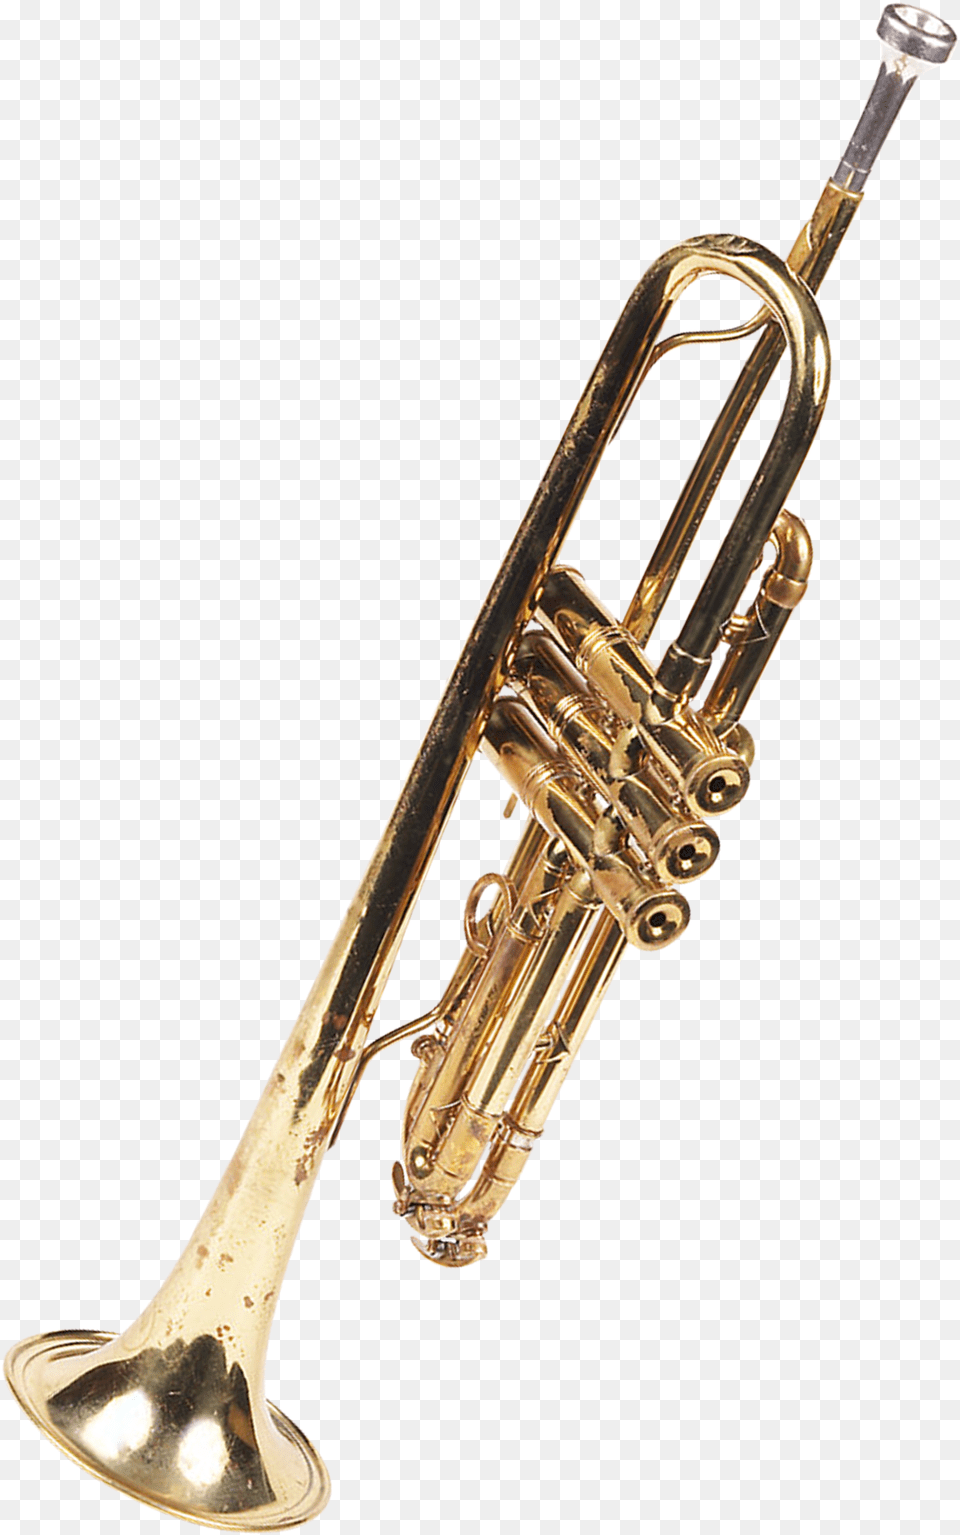 Transparent Trumpet Brass Family Southeast Asian Musical Instruments With Description, Brass Section, Horn, Musical Instrument, Flugelhorn Png